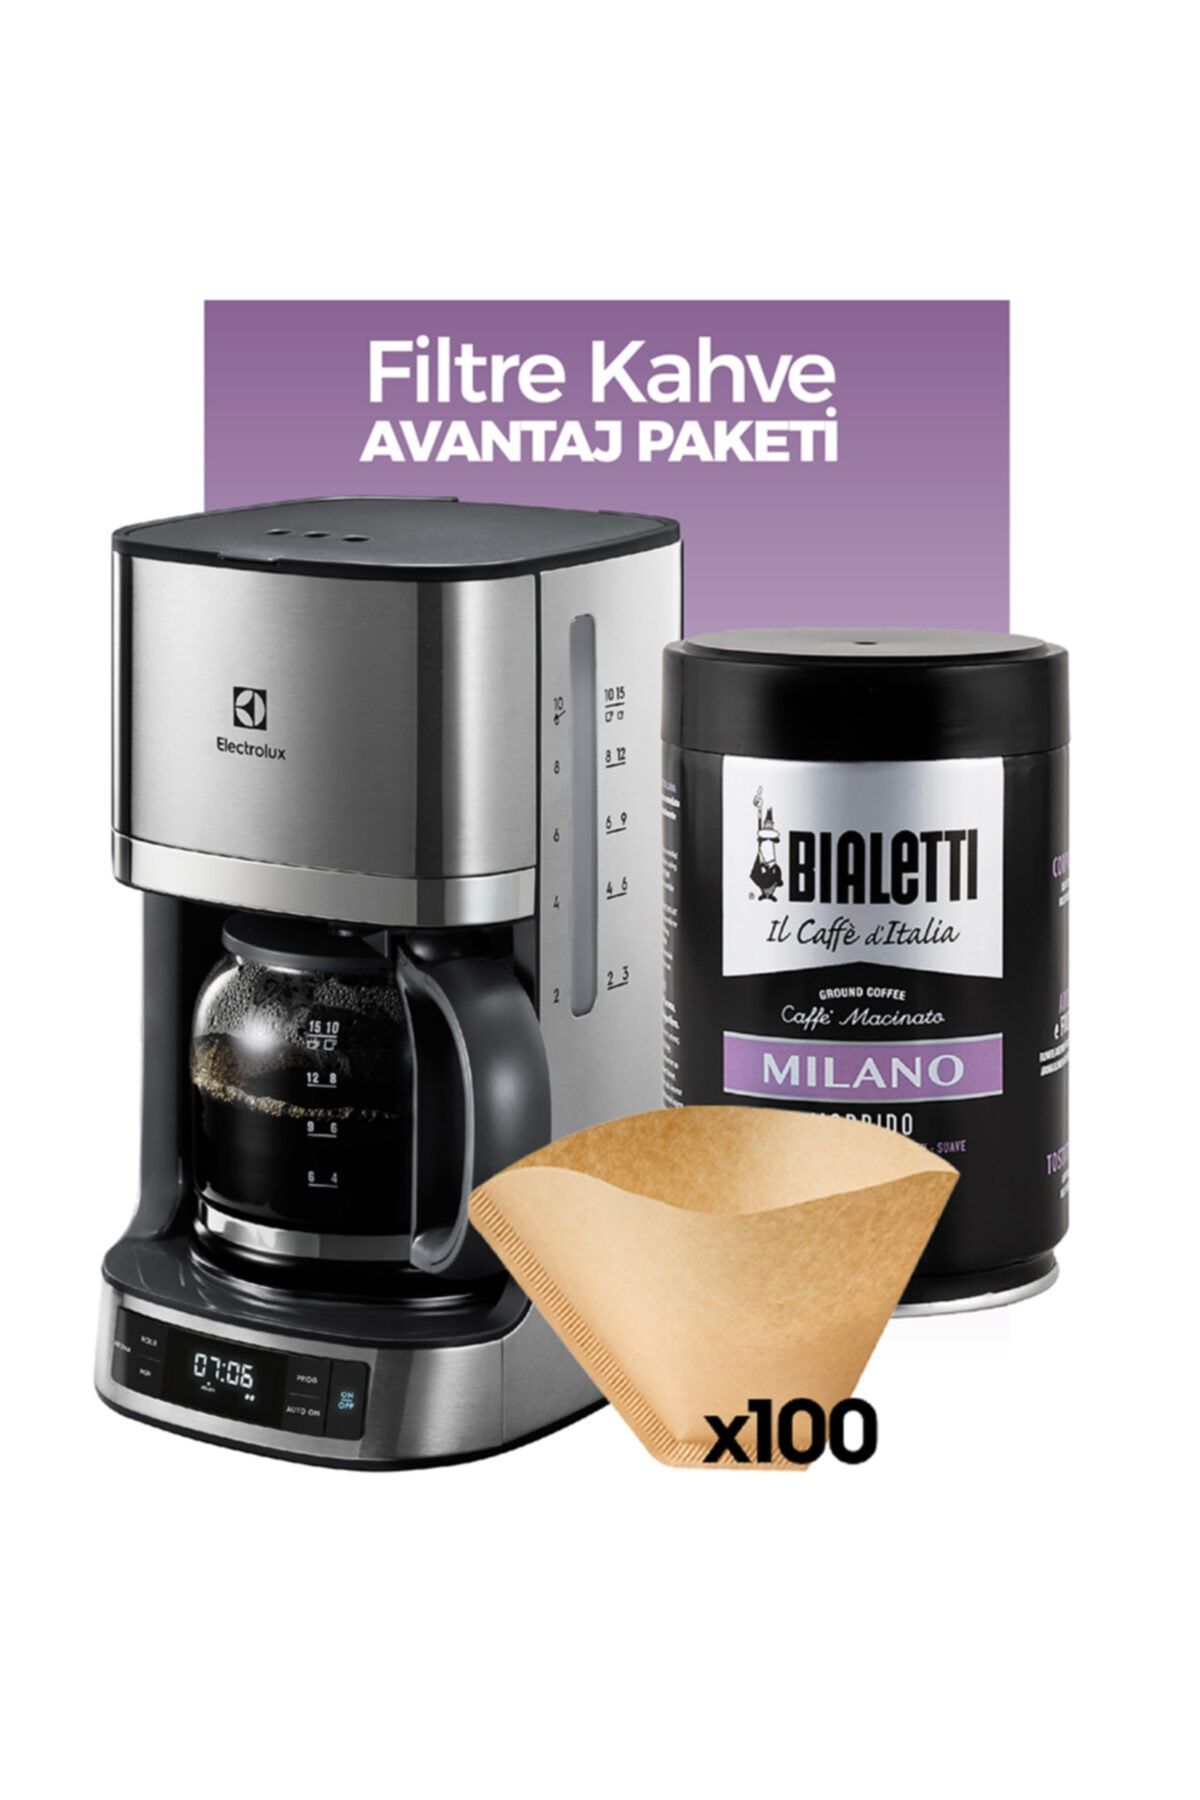 Electrolux Ekf7700 Filtre Kahve Makinesi + 250 Gr Bialetti Roma Kahve + 100'lü Filtre Avantaj Paketi